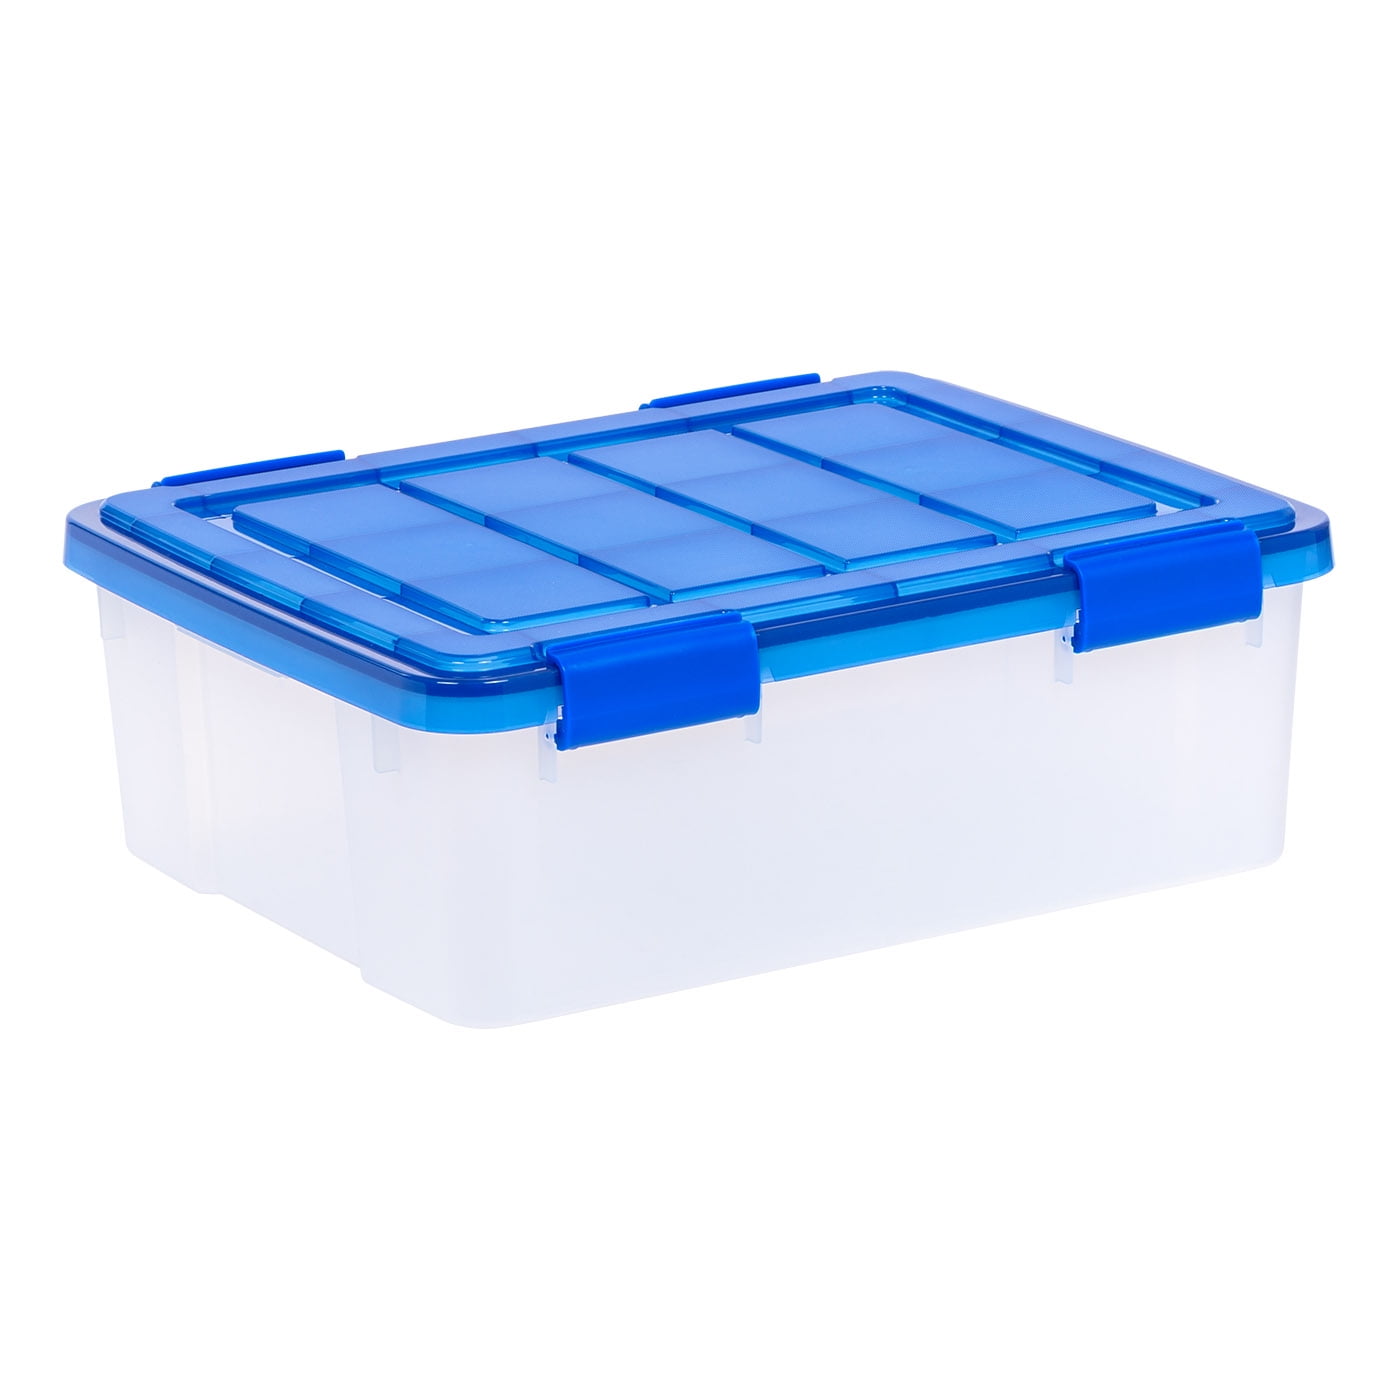 IRIS® Weathertight® Plastic Storage Containers With Latch Lids, 15